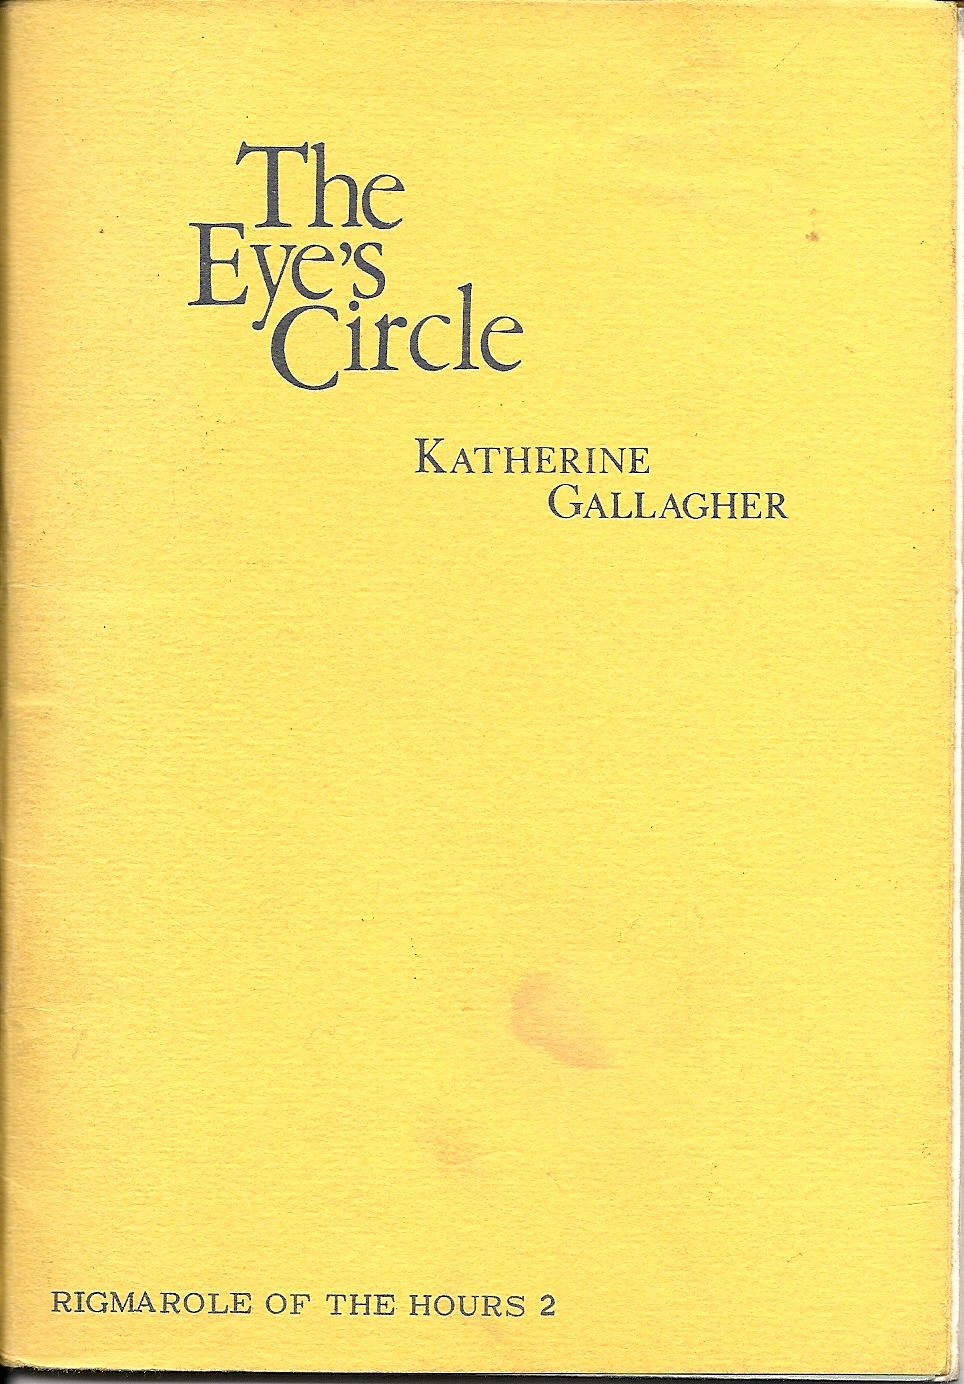 The Eye's Circle